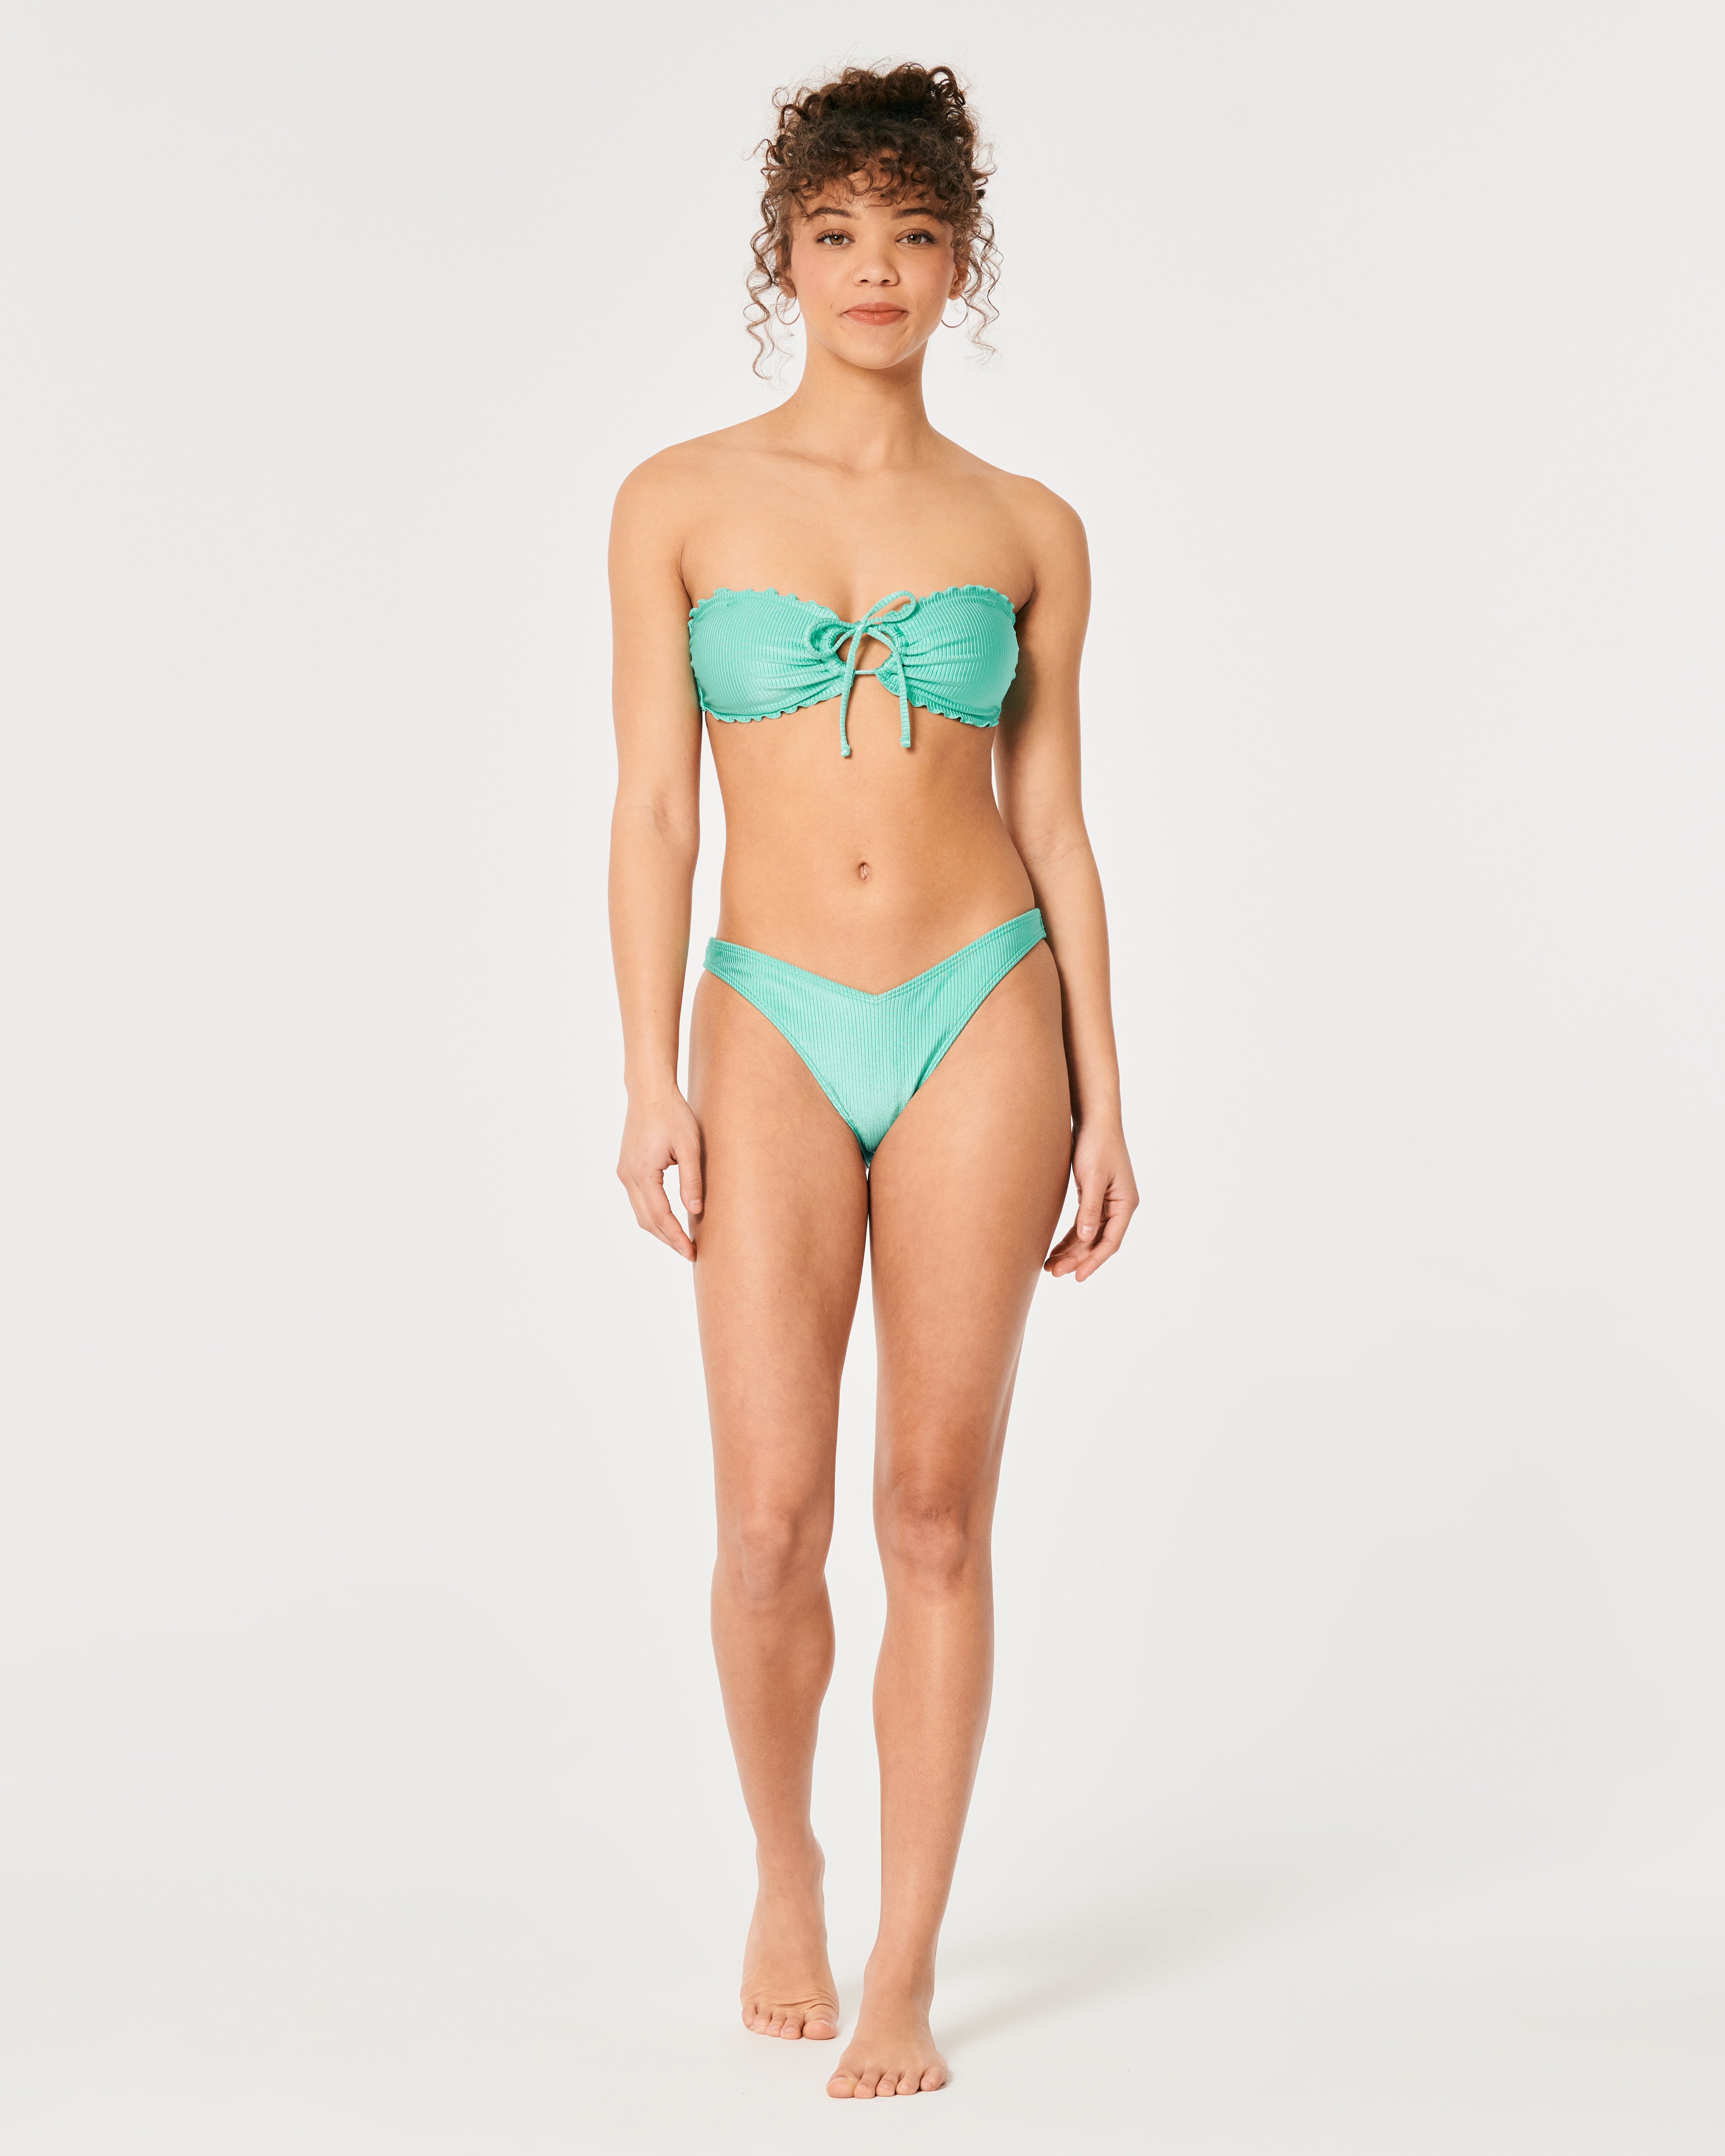 Solid Shimmer - Underwire Bikini Top for Women